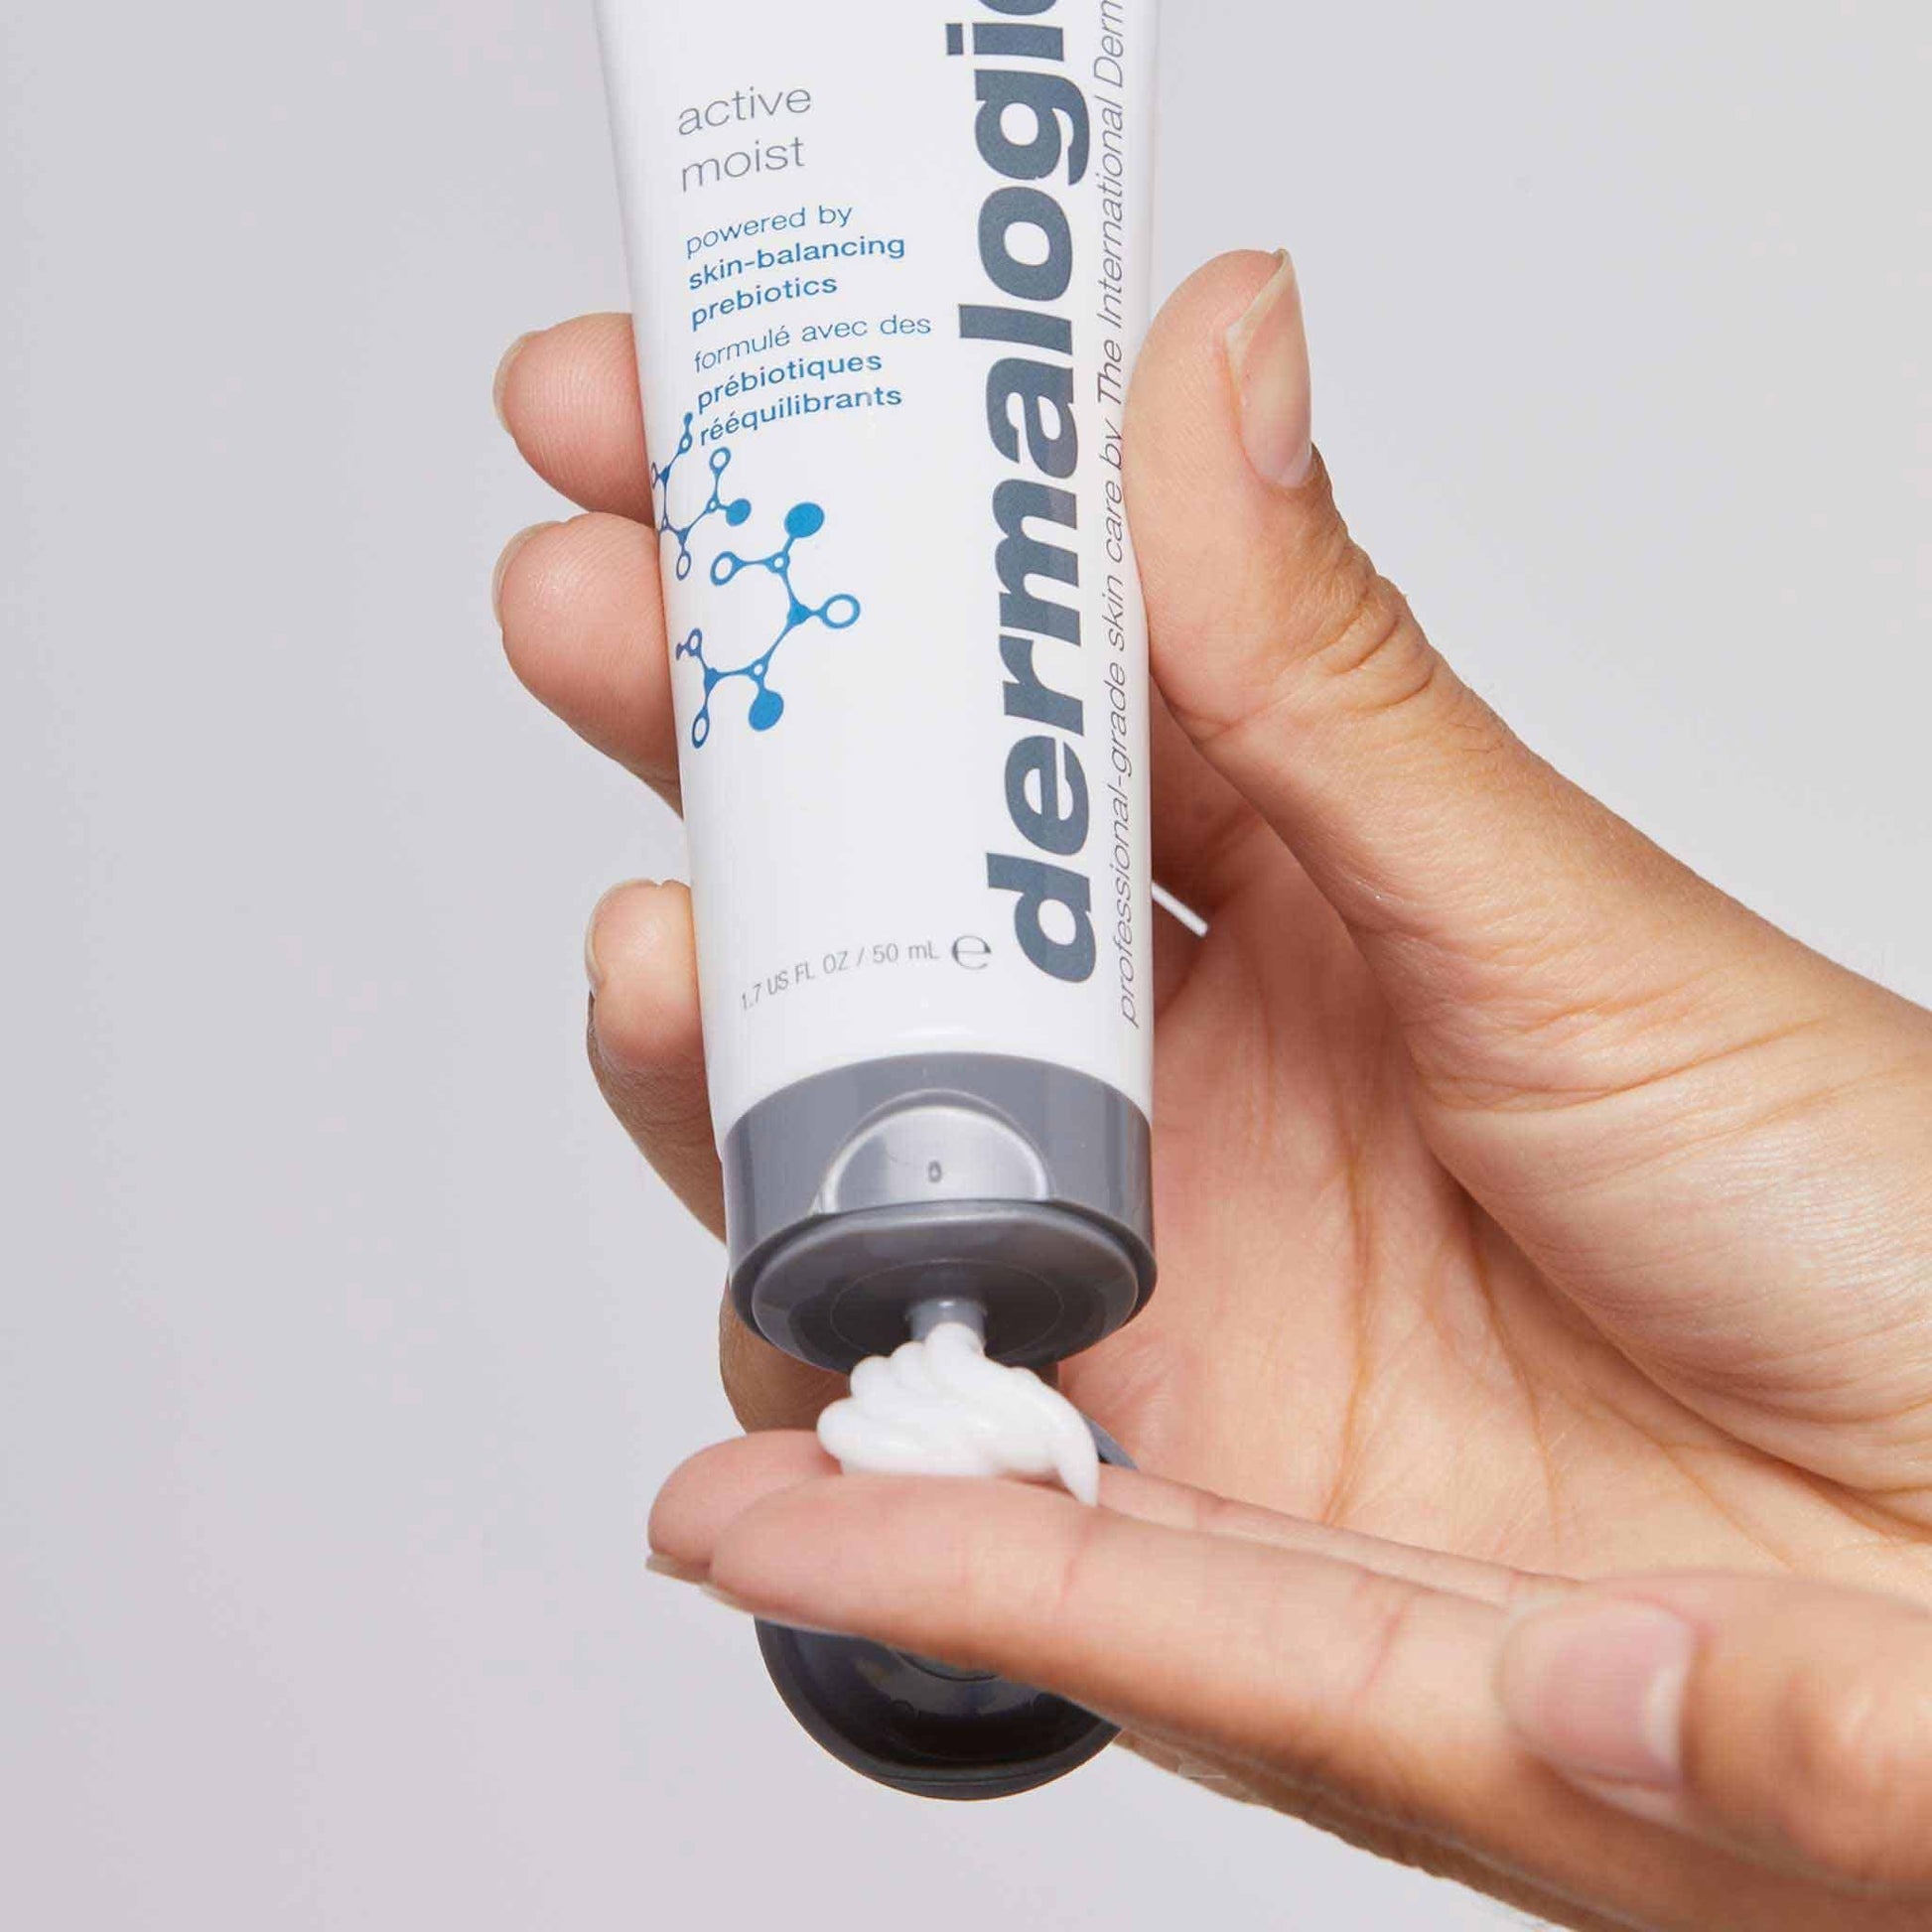 active moist moisturizer - Dermalogica Singapore